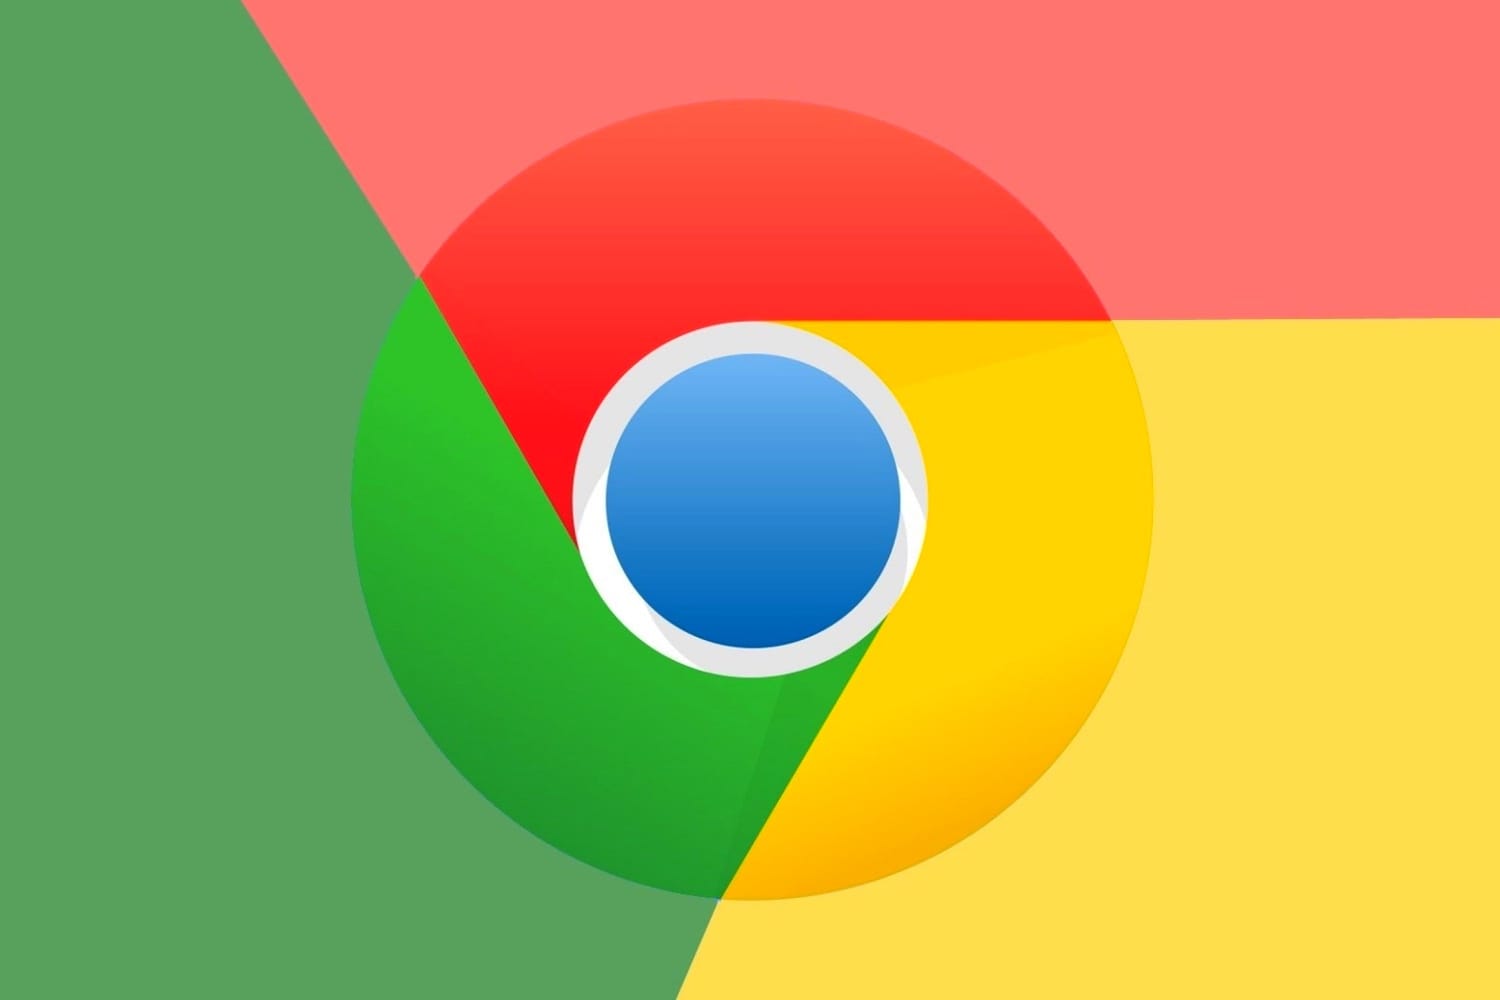 google chrome browser update